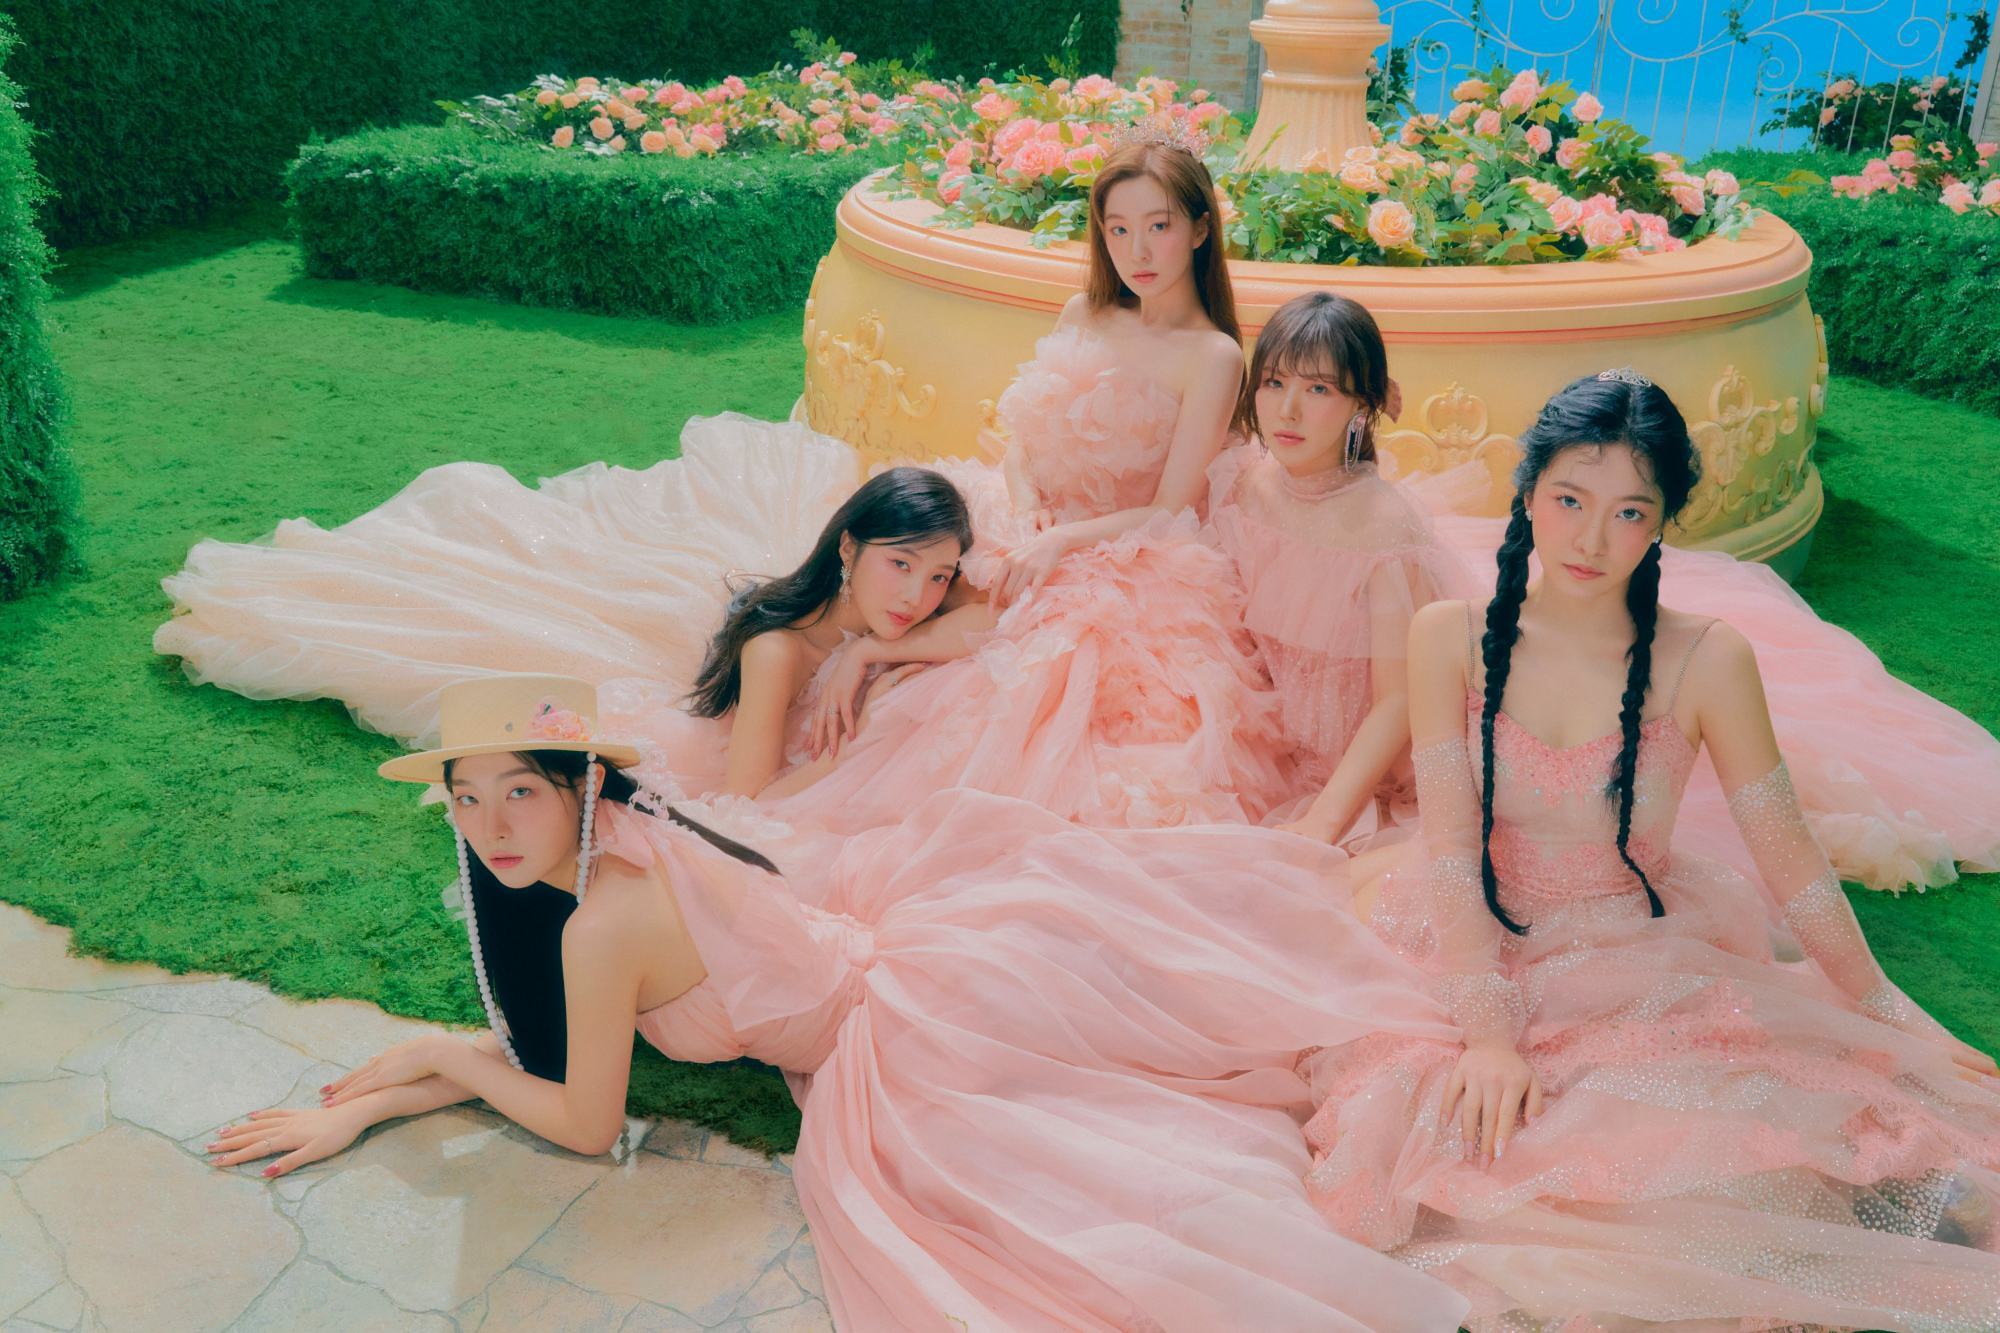 Red Velvet Takes Diplo Inside the Life of a K-Pop Supergroup